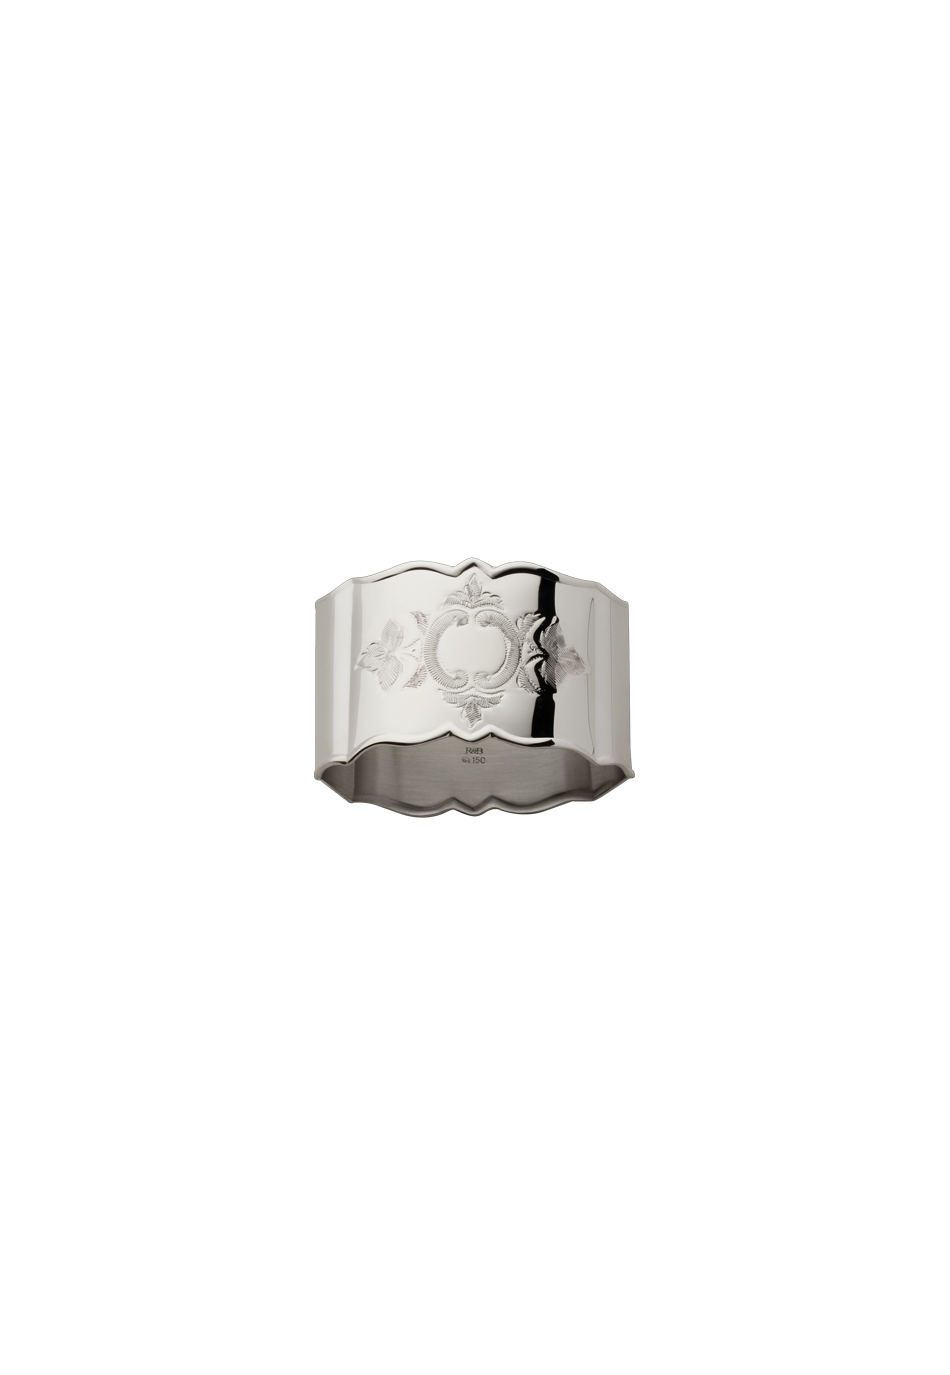 Ostfriesen Table Napkin Ring (150g massive silverplated)